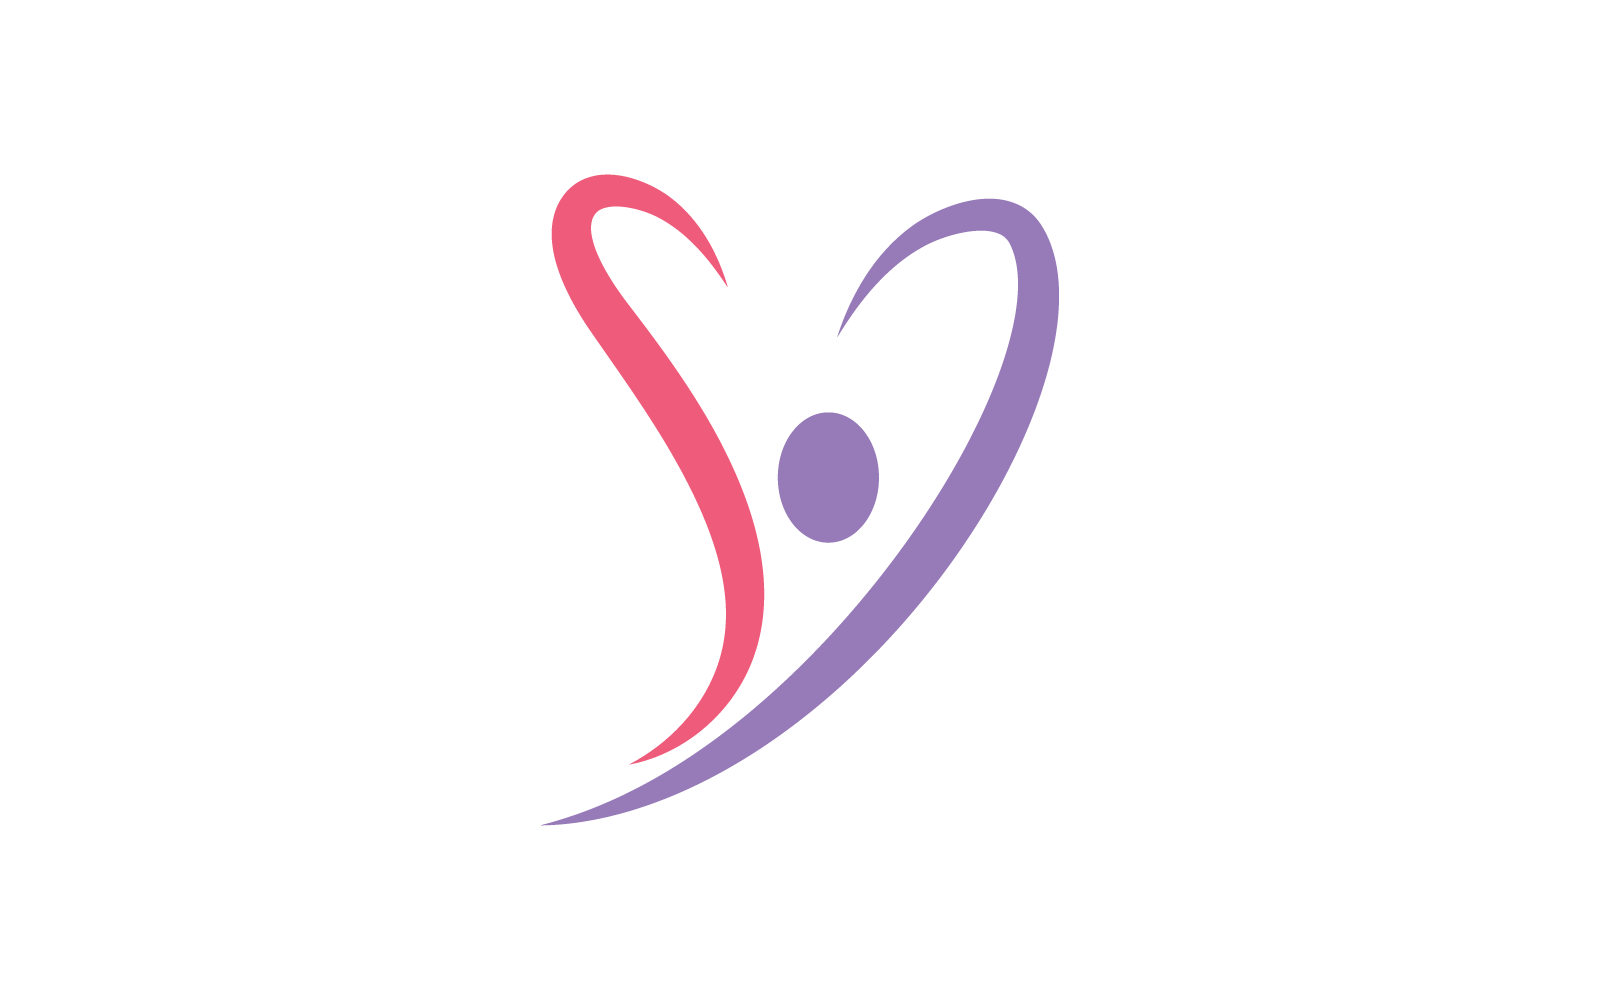 Healthy Life people design vector logo icon template